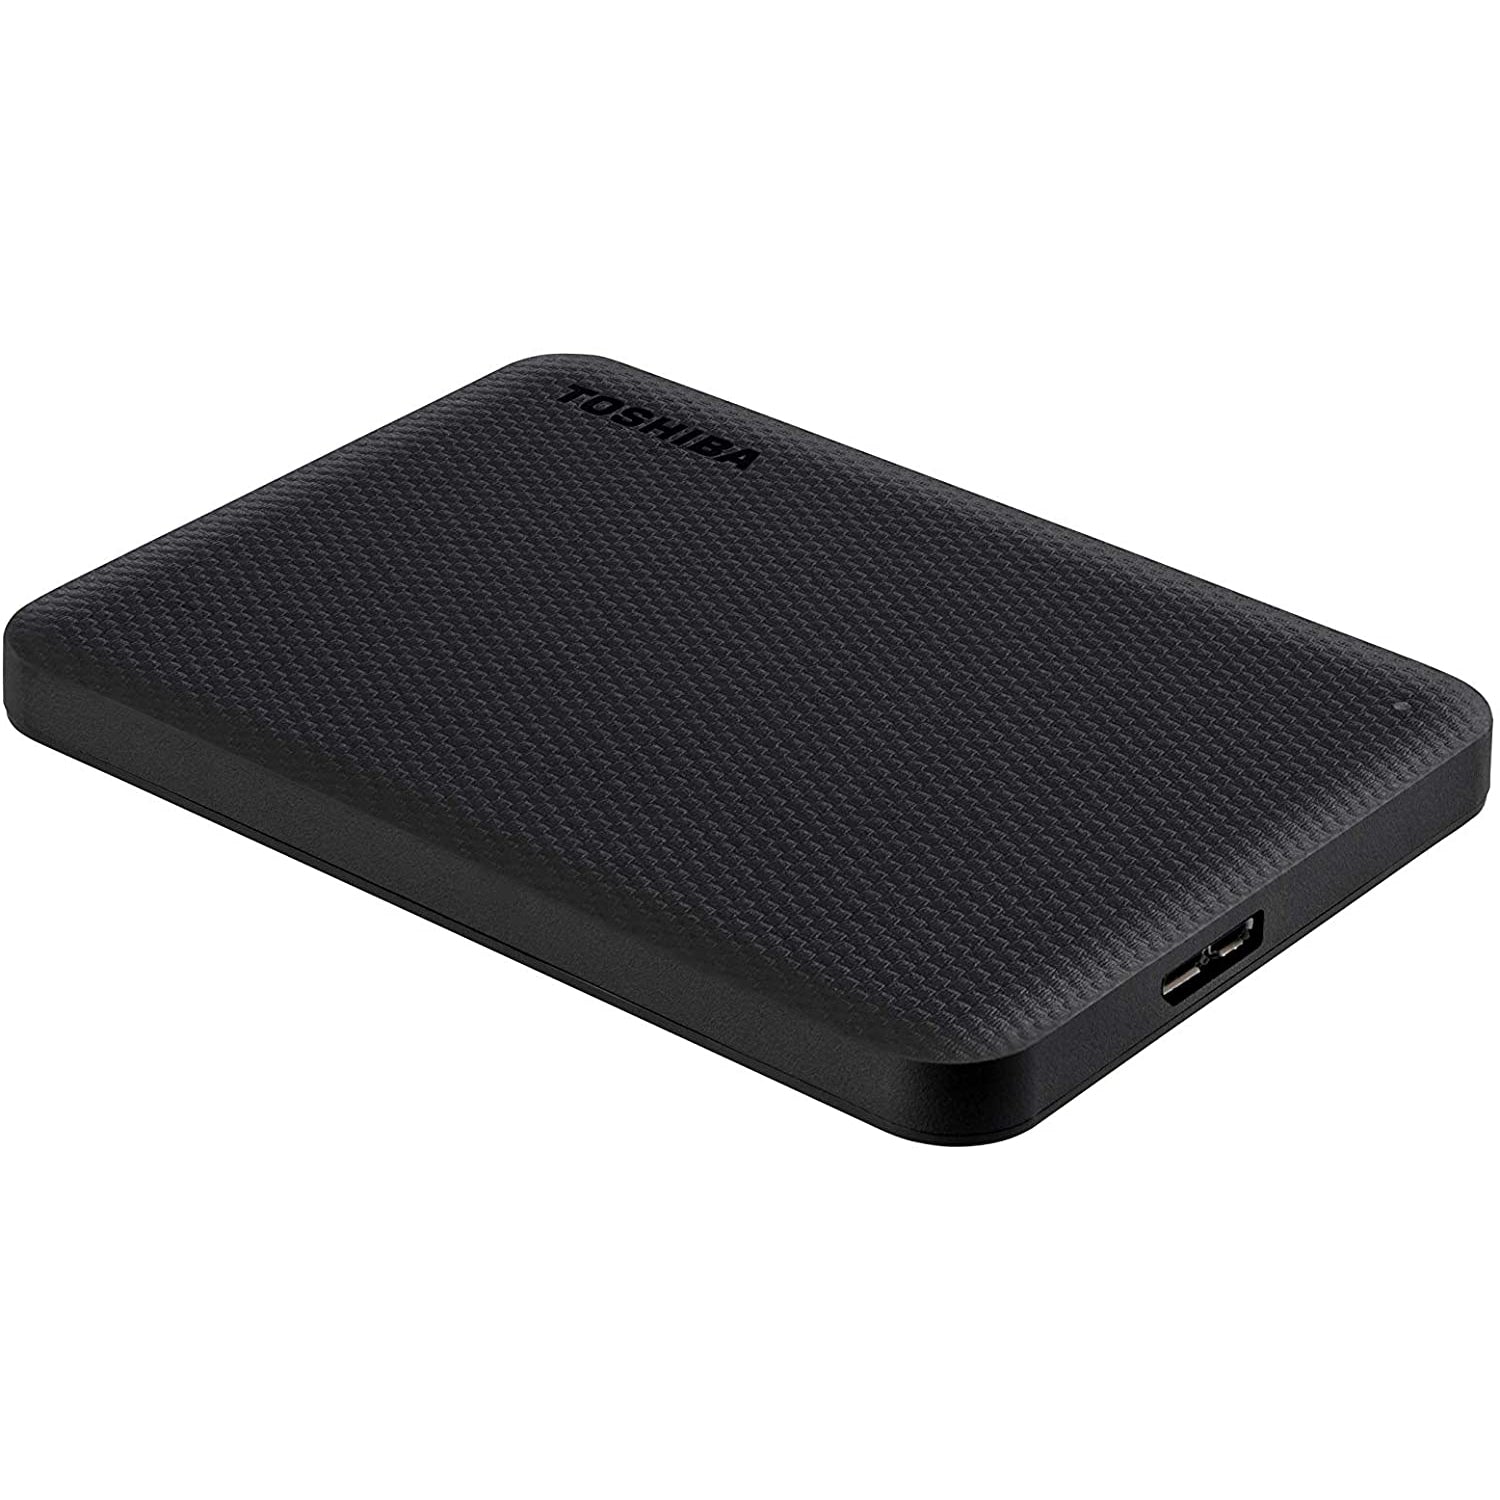 Toshiba Canvio Advance 1TB Portable External Hard Drive USB 3.0, Black - Refurbished Excellent